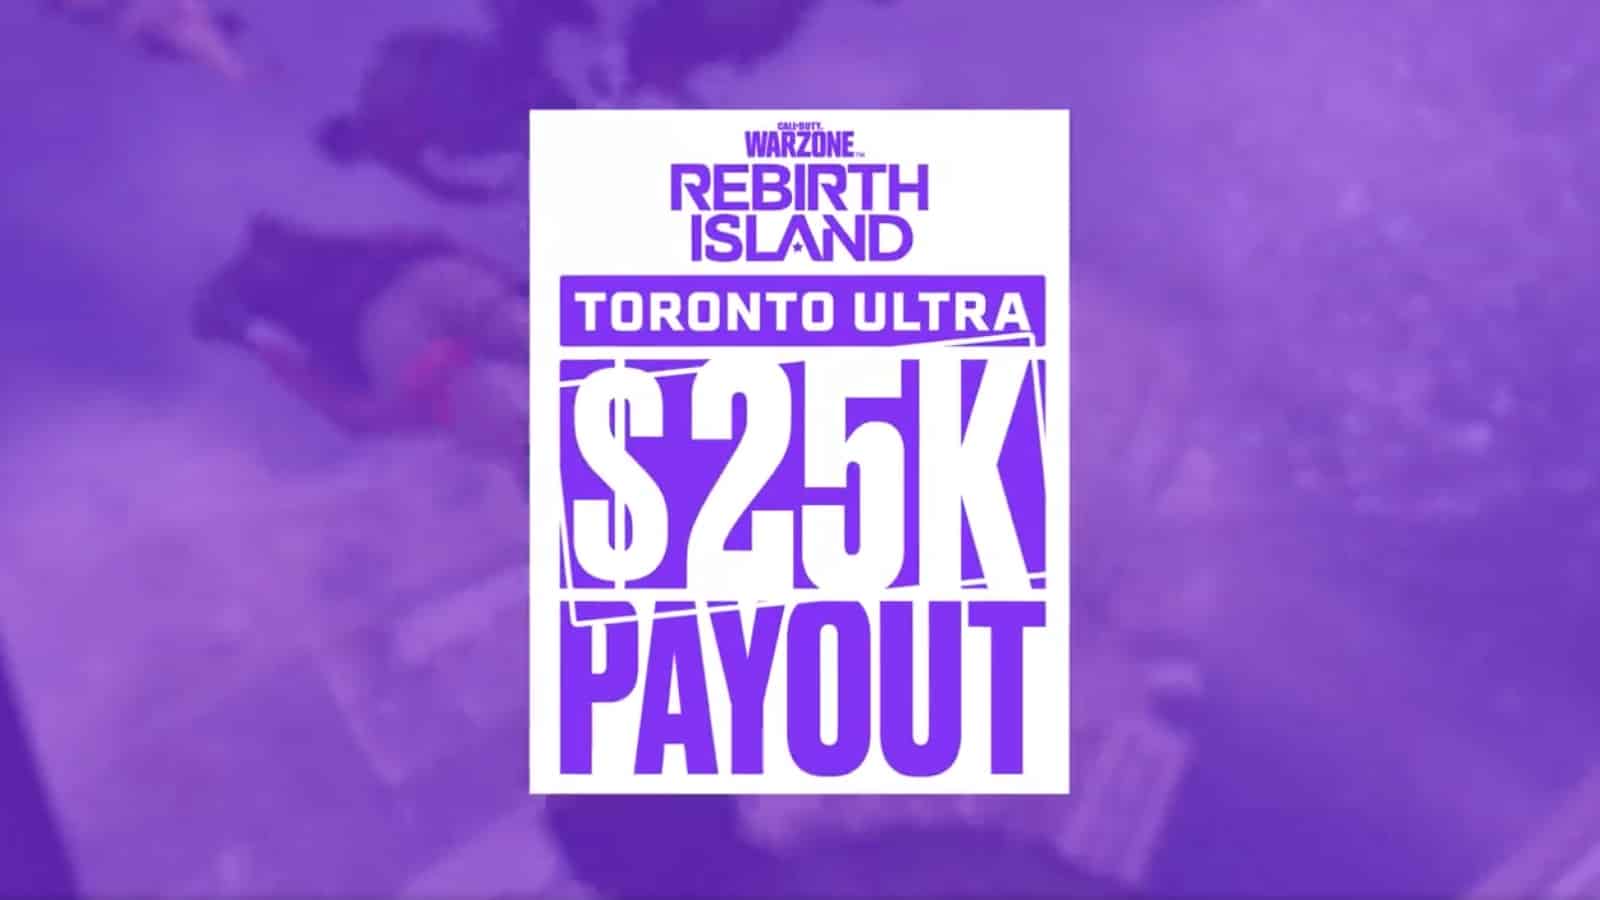 toronto ultra 25k payout warzone tournament logo